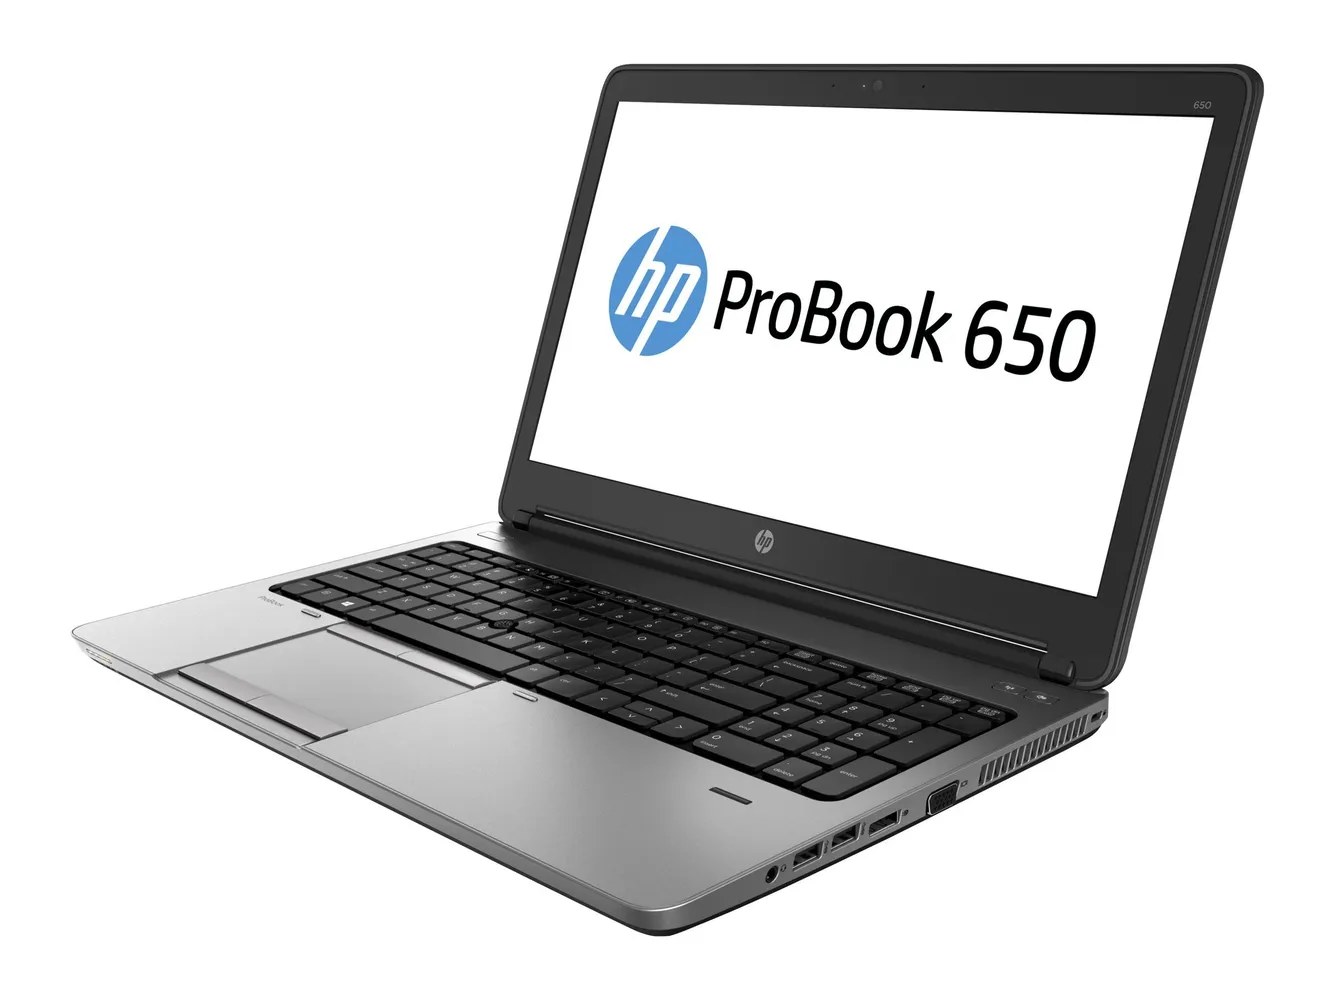 HP ProBook 650 G1 i5-4200M 8Go 500Go 15.6'' W10